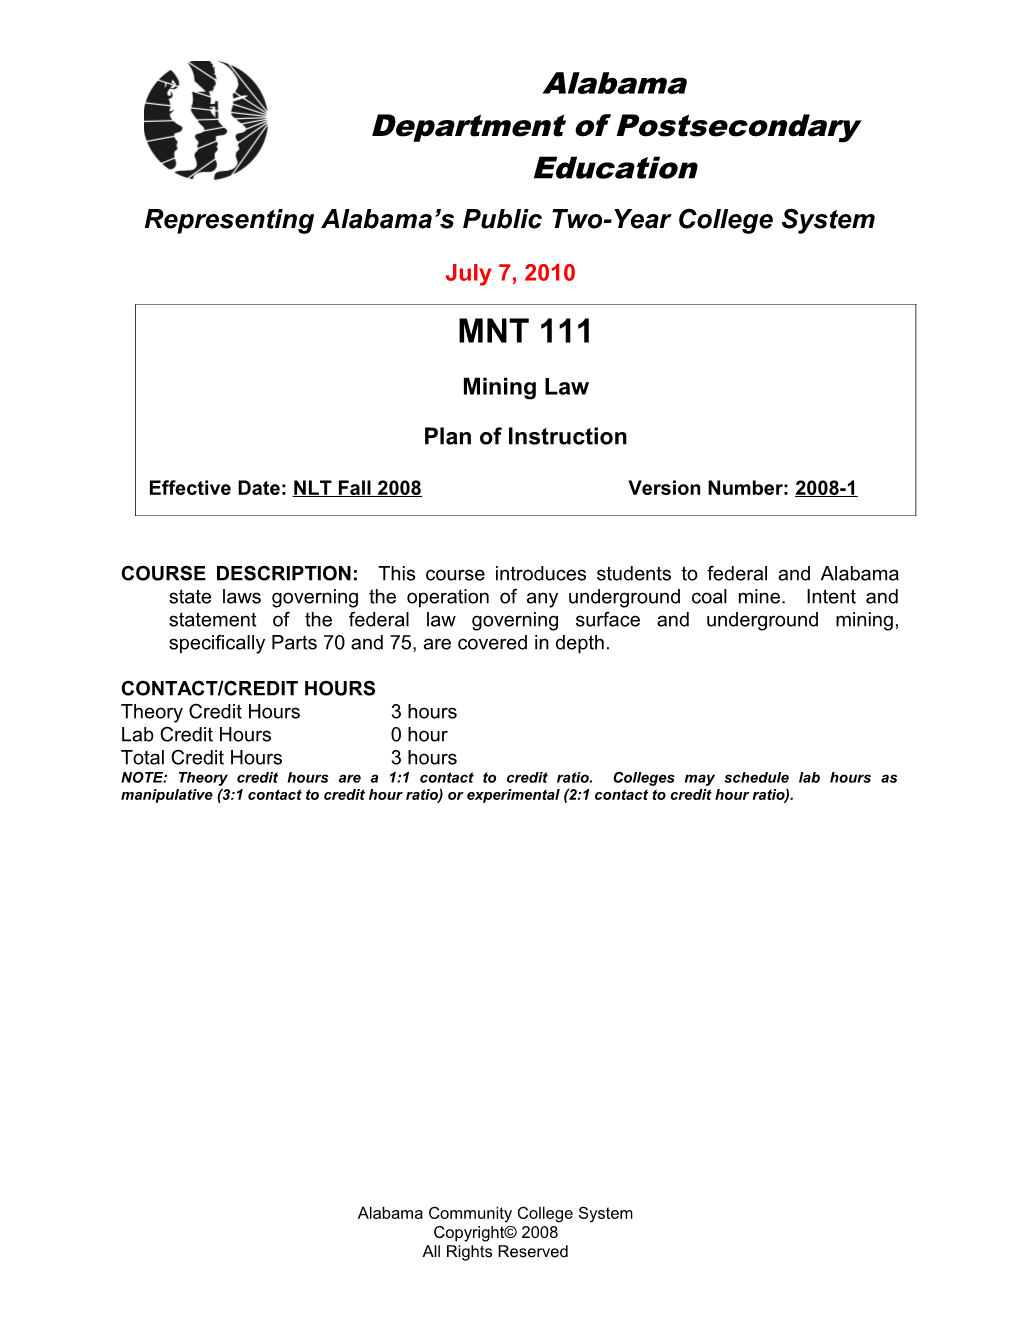 MNT 111 - Mining Law